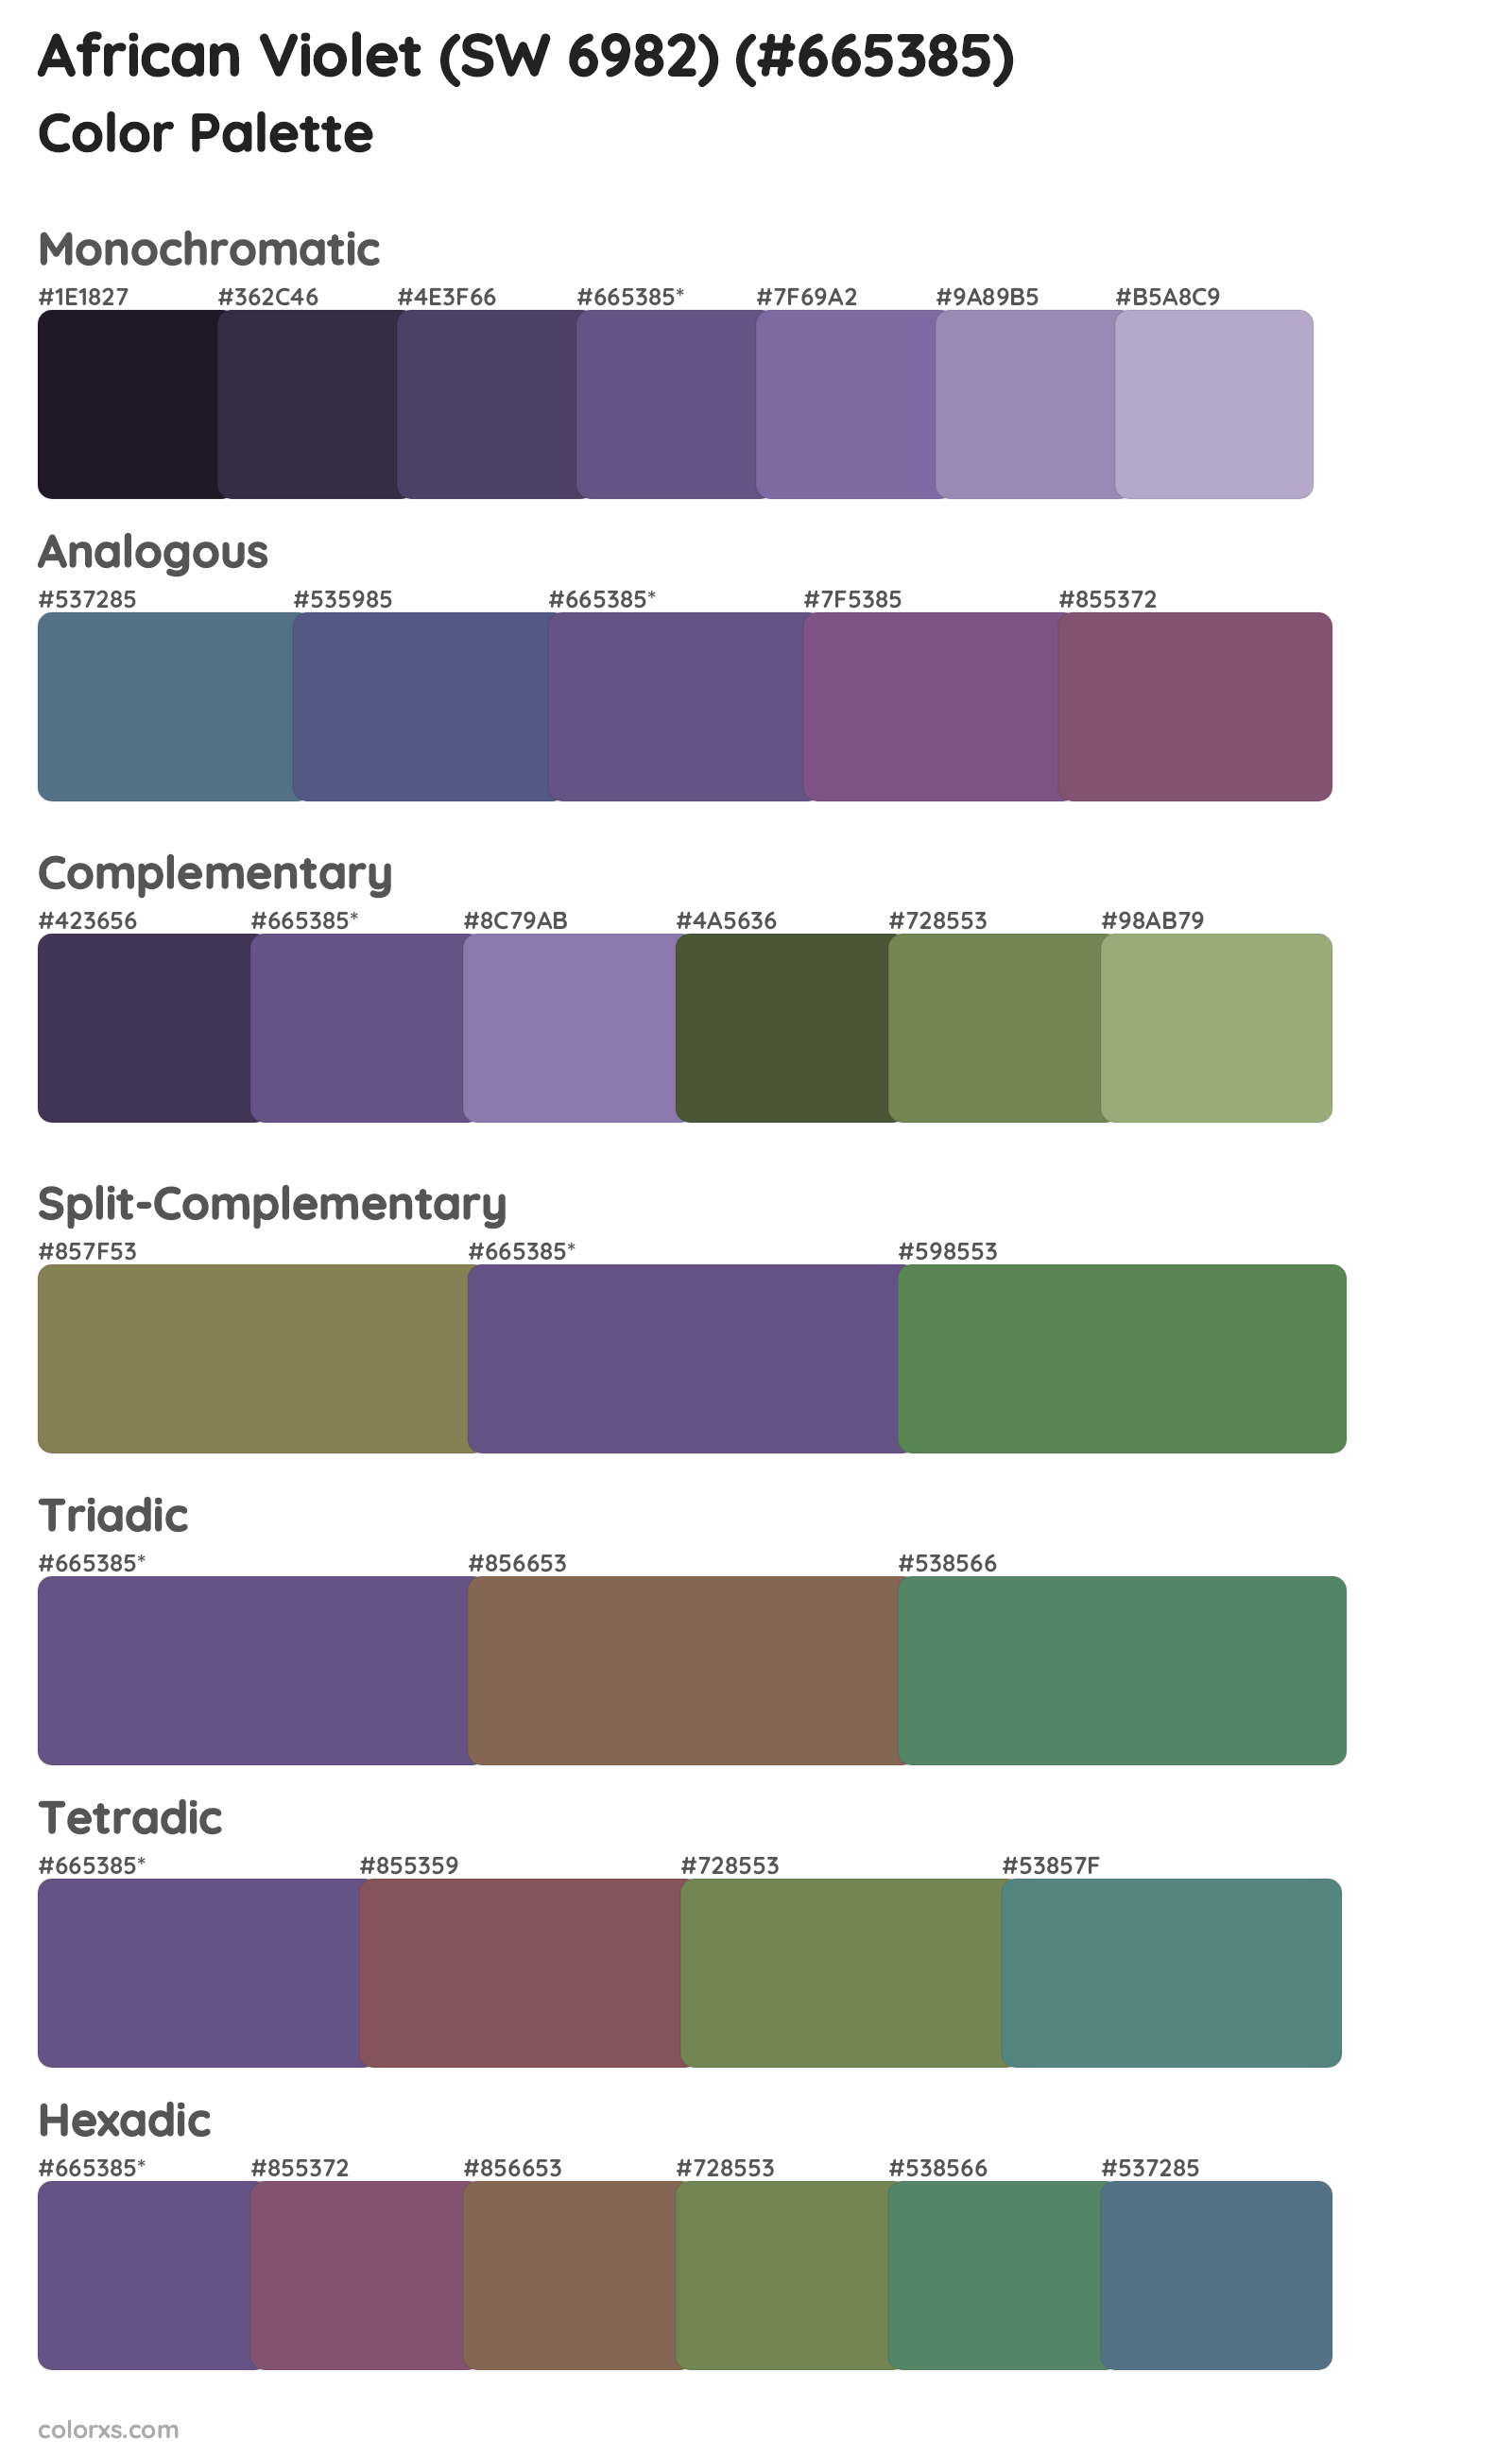 African Violet (SW 6982) Color Scheme Palettes